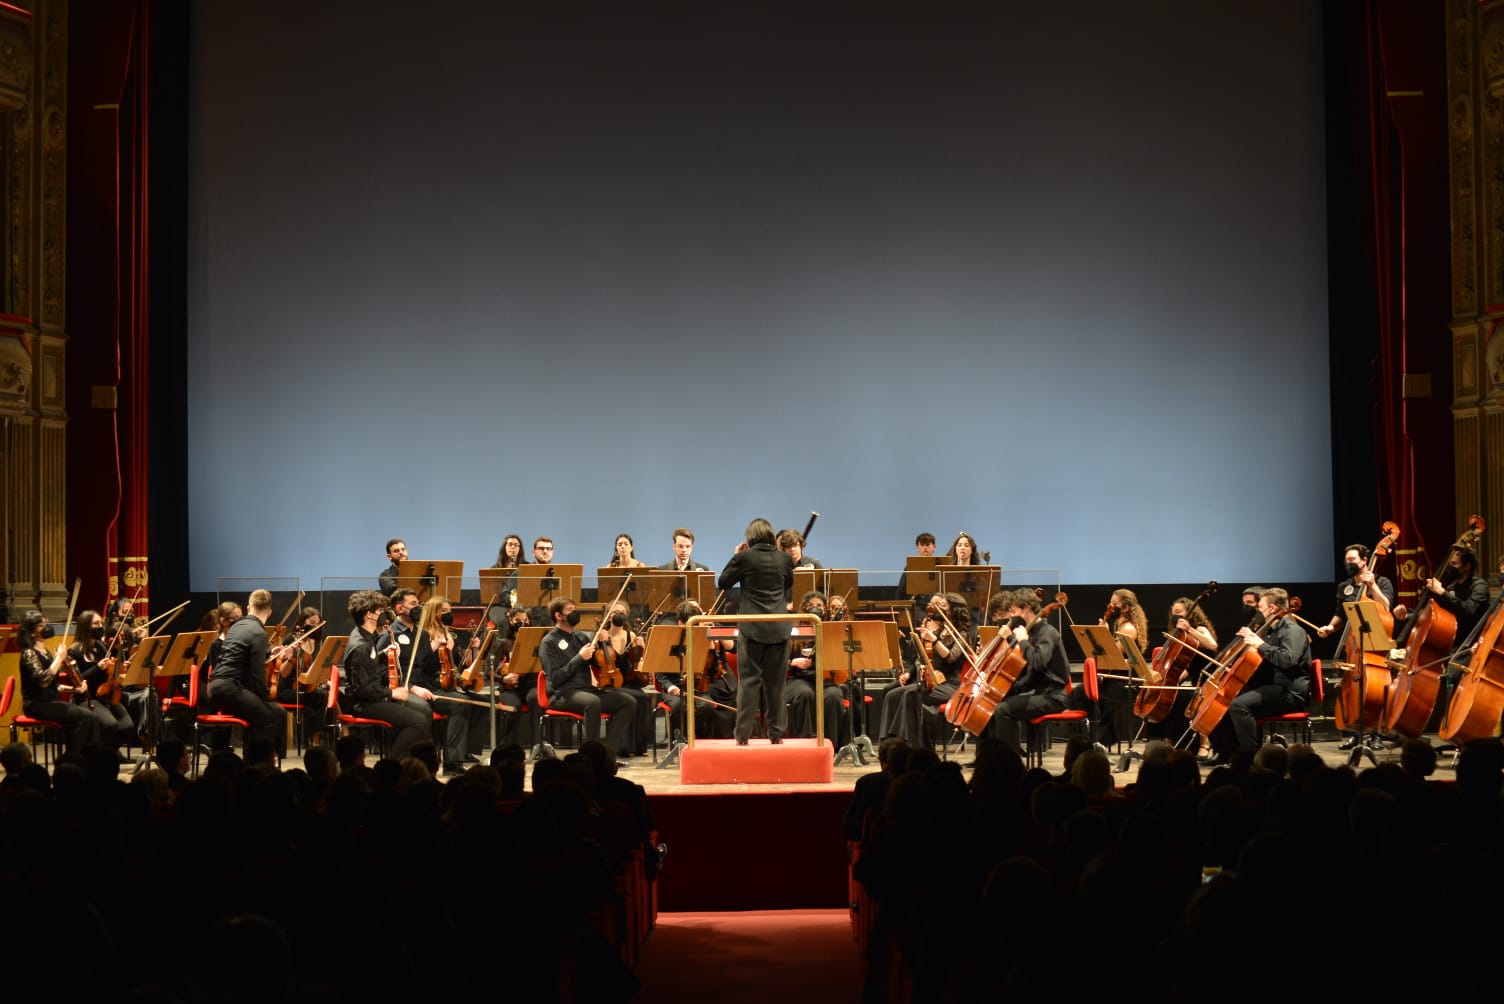 Orchestra Giovanile Giuseppe Sinopoli 